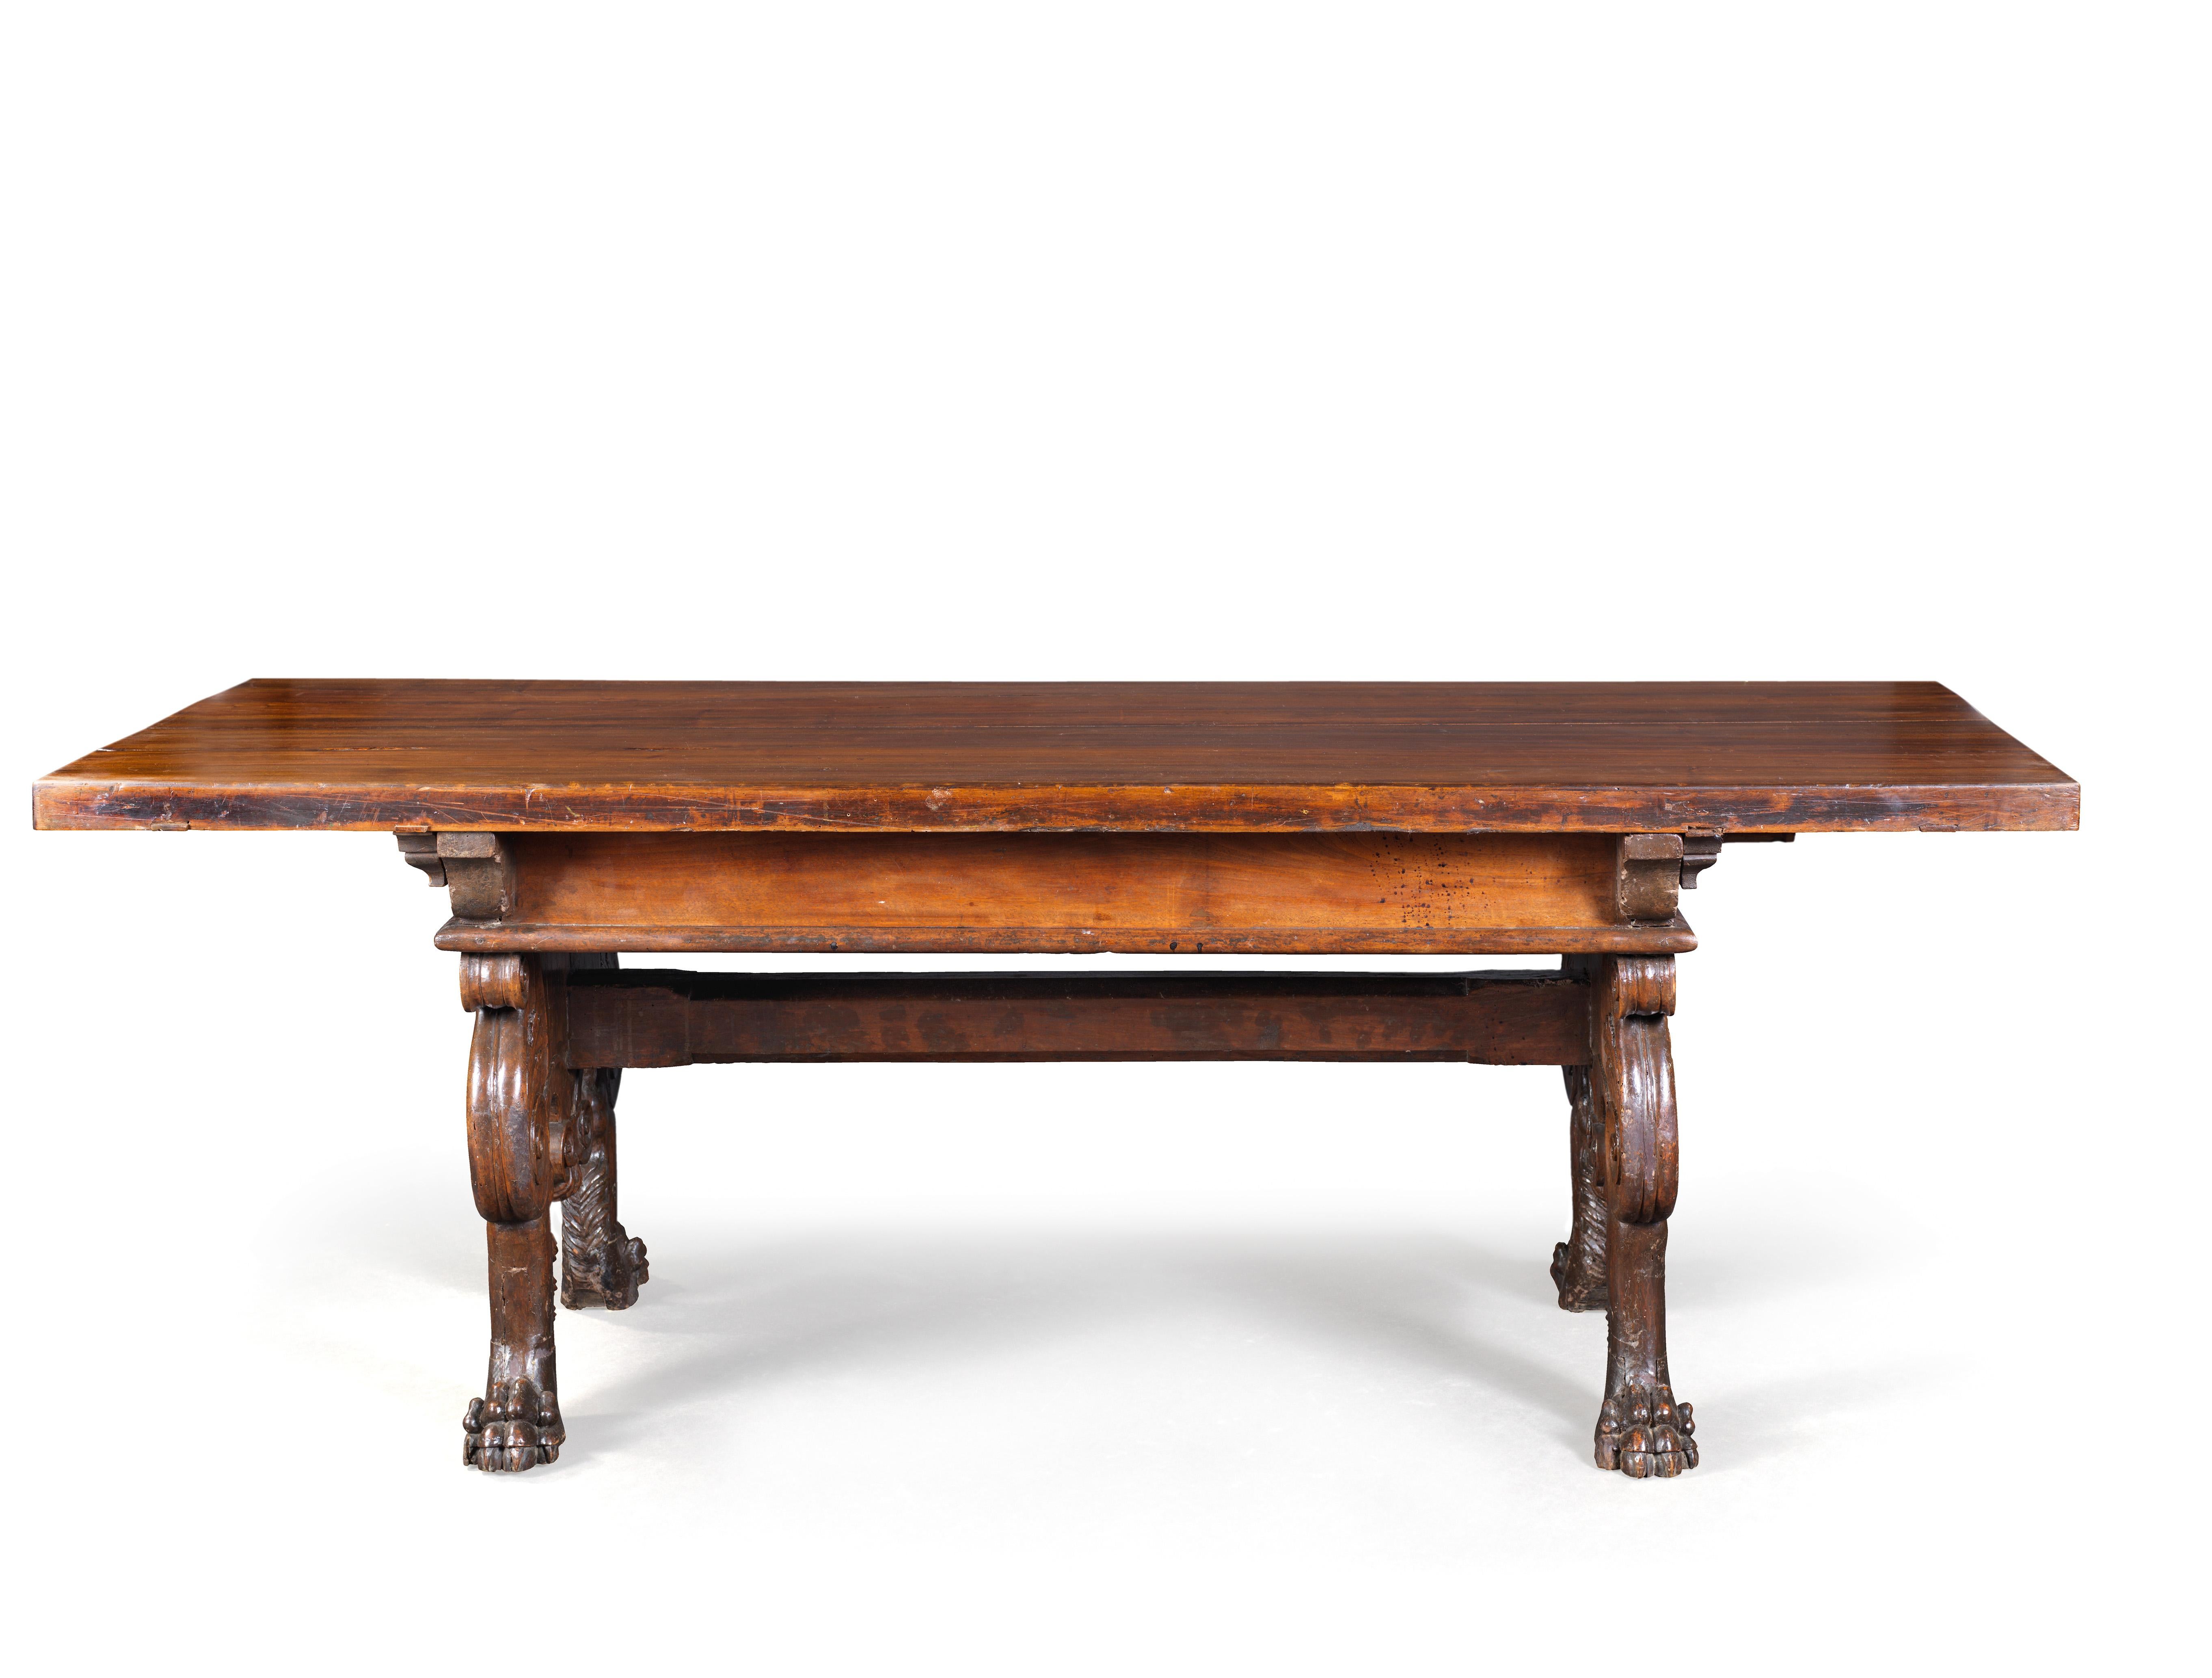 16th century table